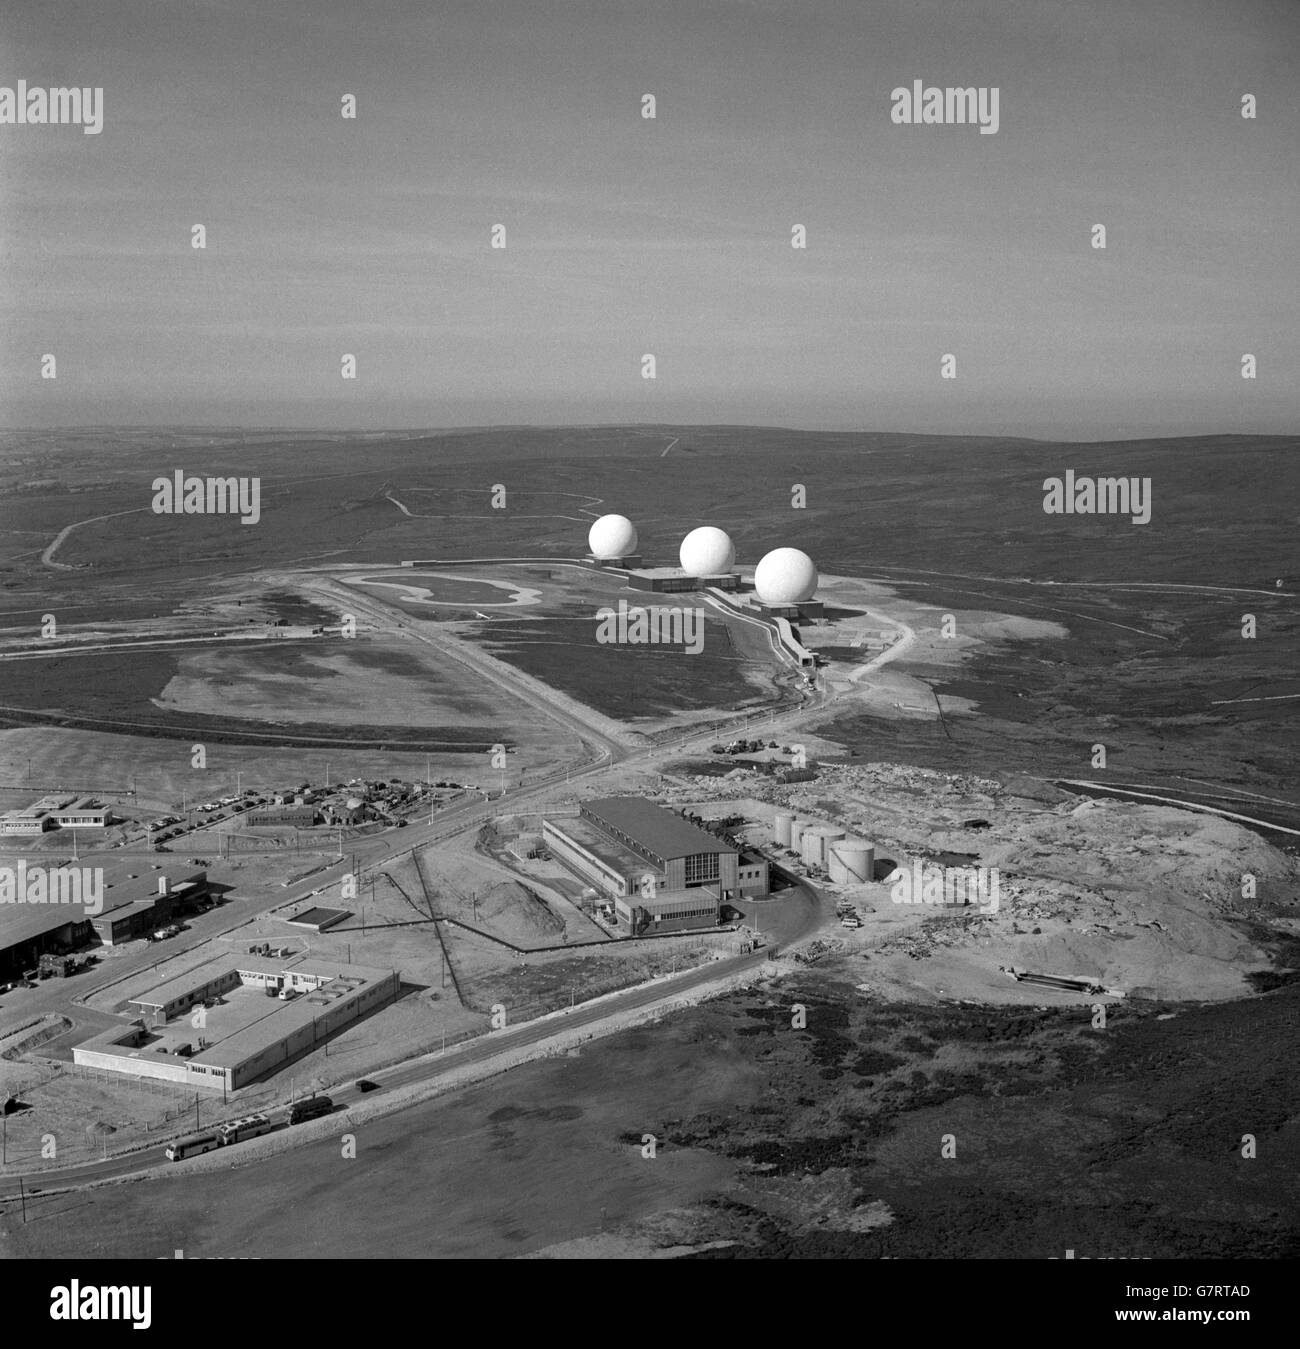 Militär - Raketenstarts - Ballistic Missile Early Warning System Bahnhof - RAF - Raketenstarts Moors, Nord Yorskhire Stockfoto